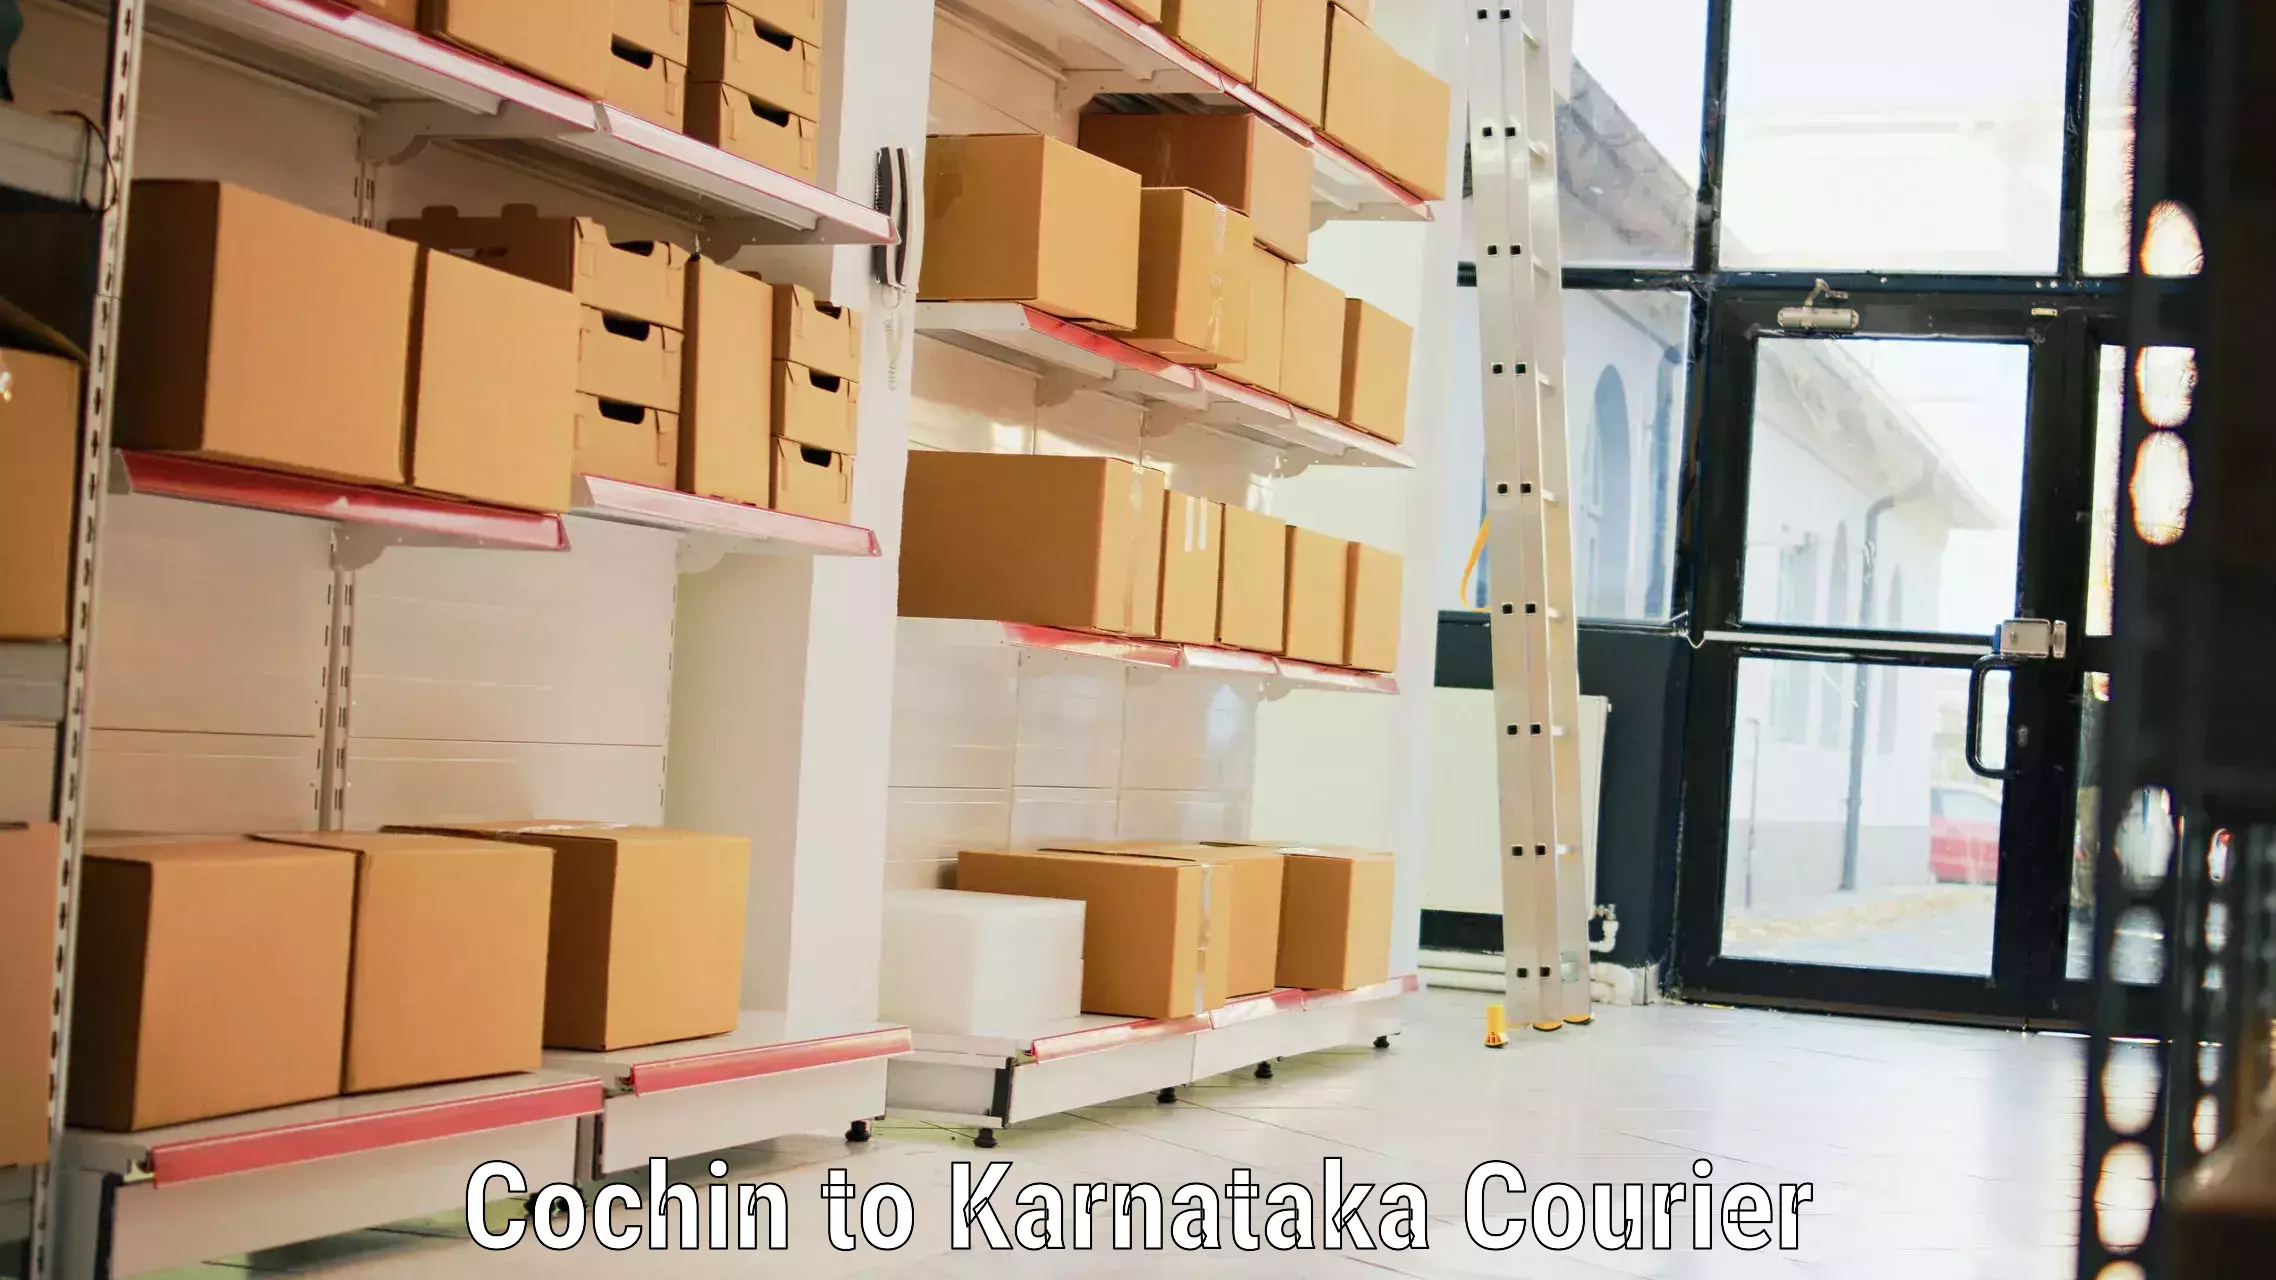 Baggage shipping advice Cochin to Karnataka